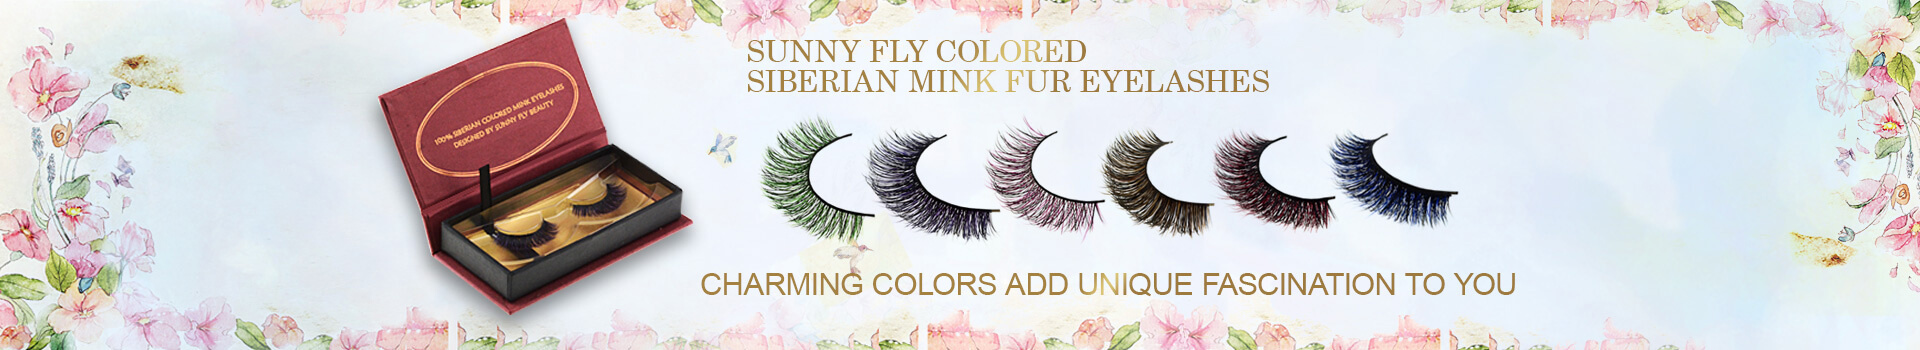 Farget Siberian Mink Fur Eyelashes MC63